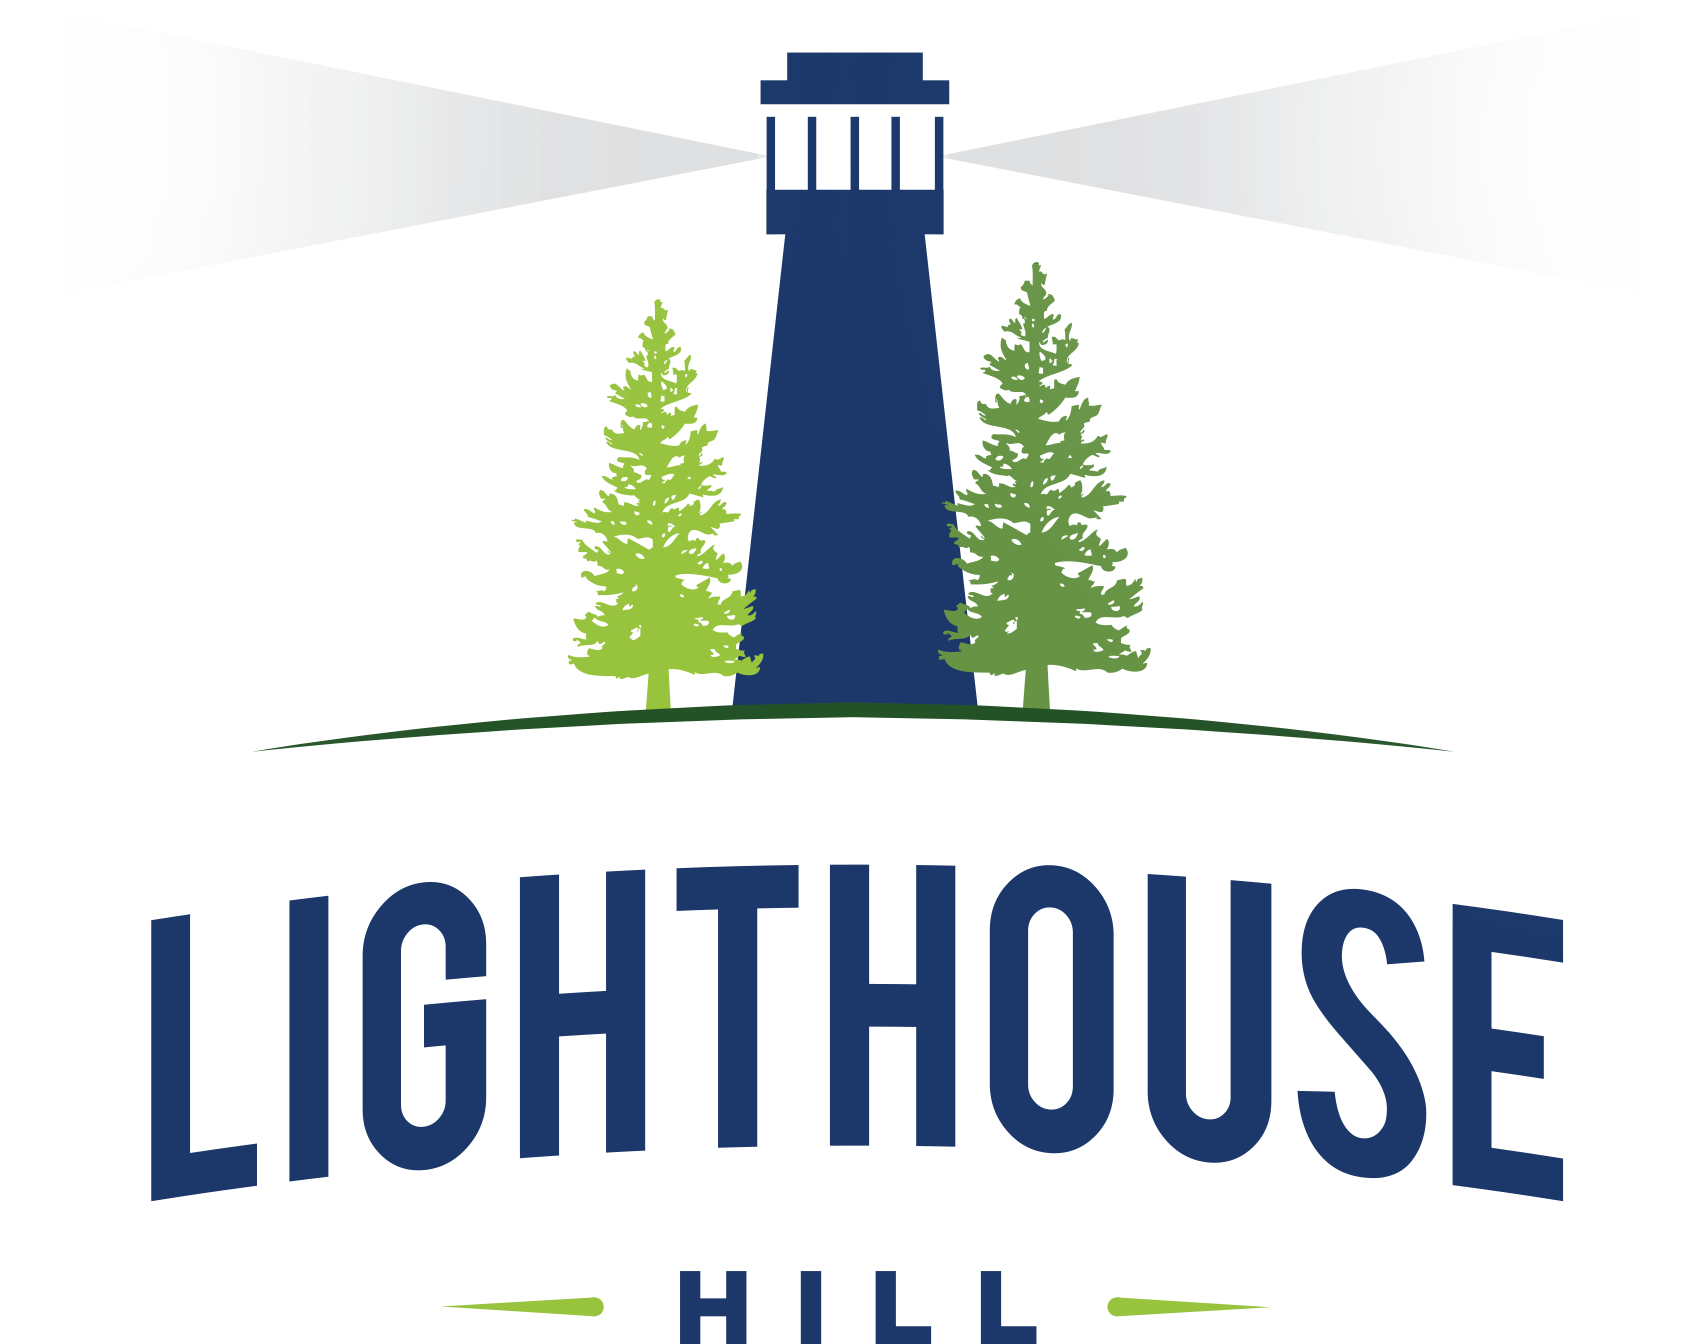 Lighthouse Hill Logo